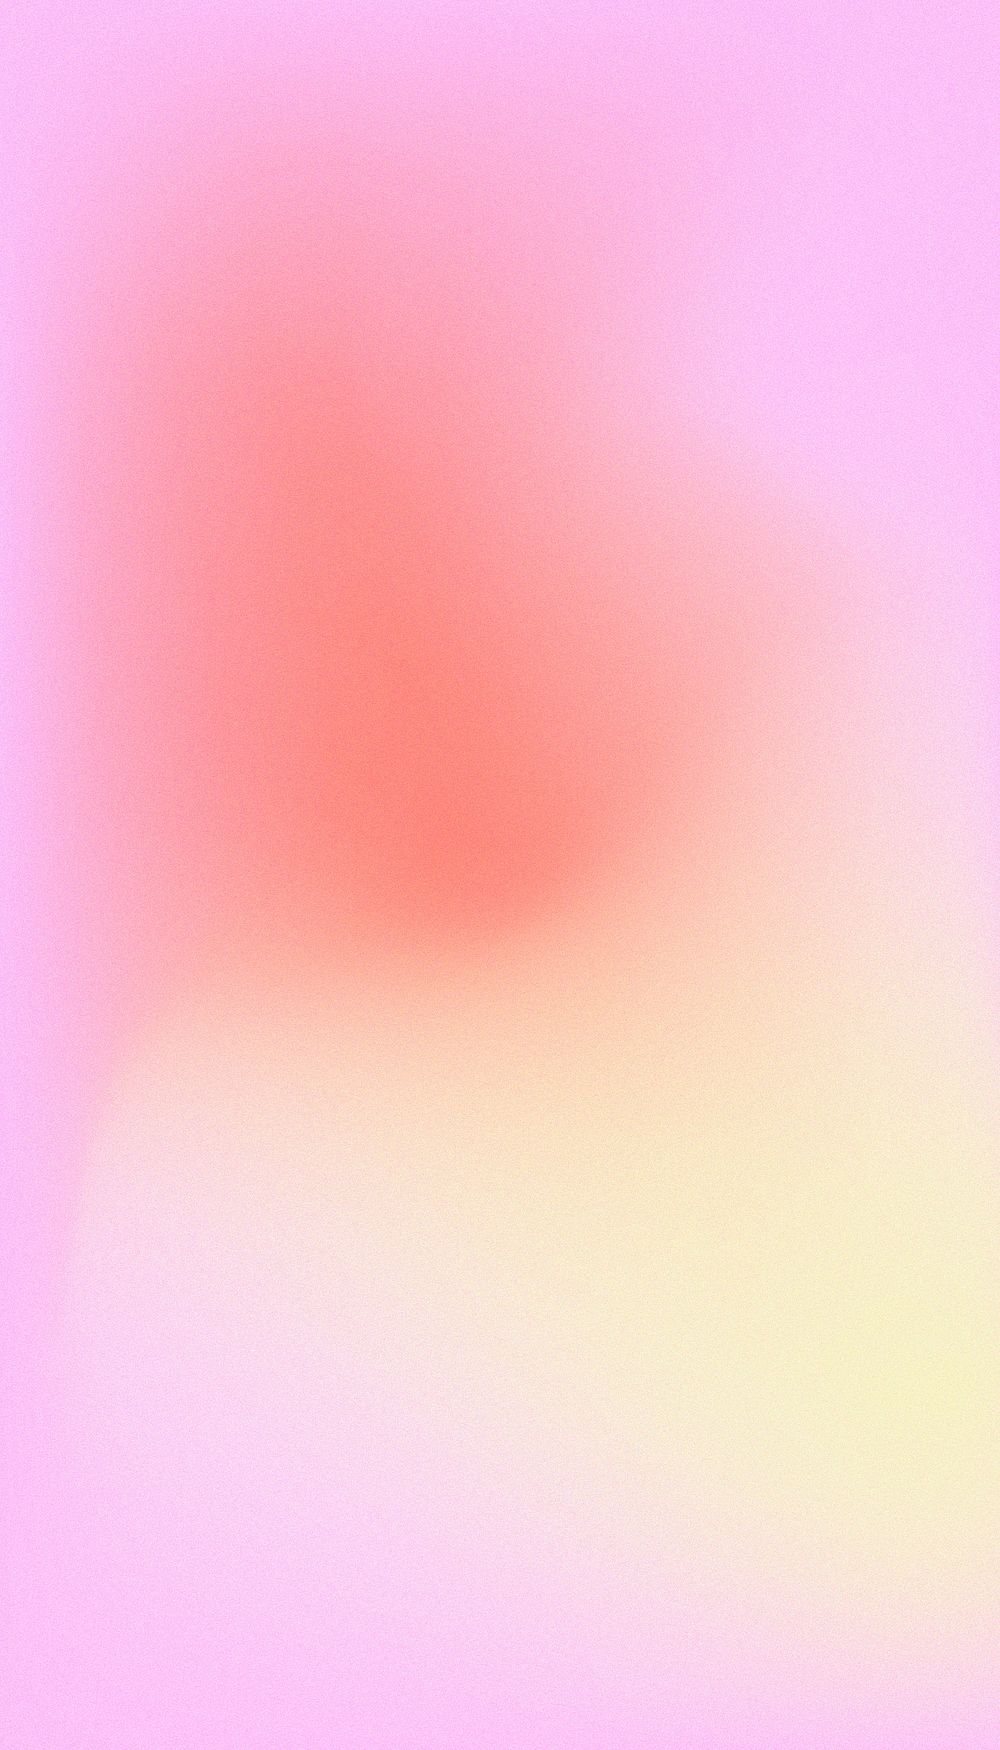 Pink gradient iPhone wallpaper, aesthetic | Premium Photo - rawpixel